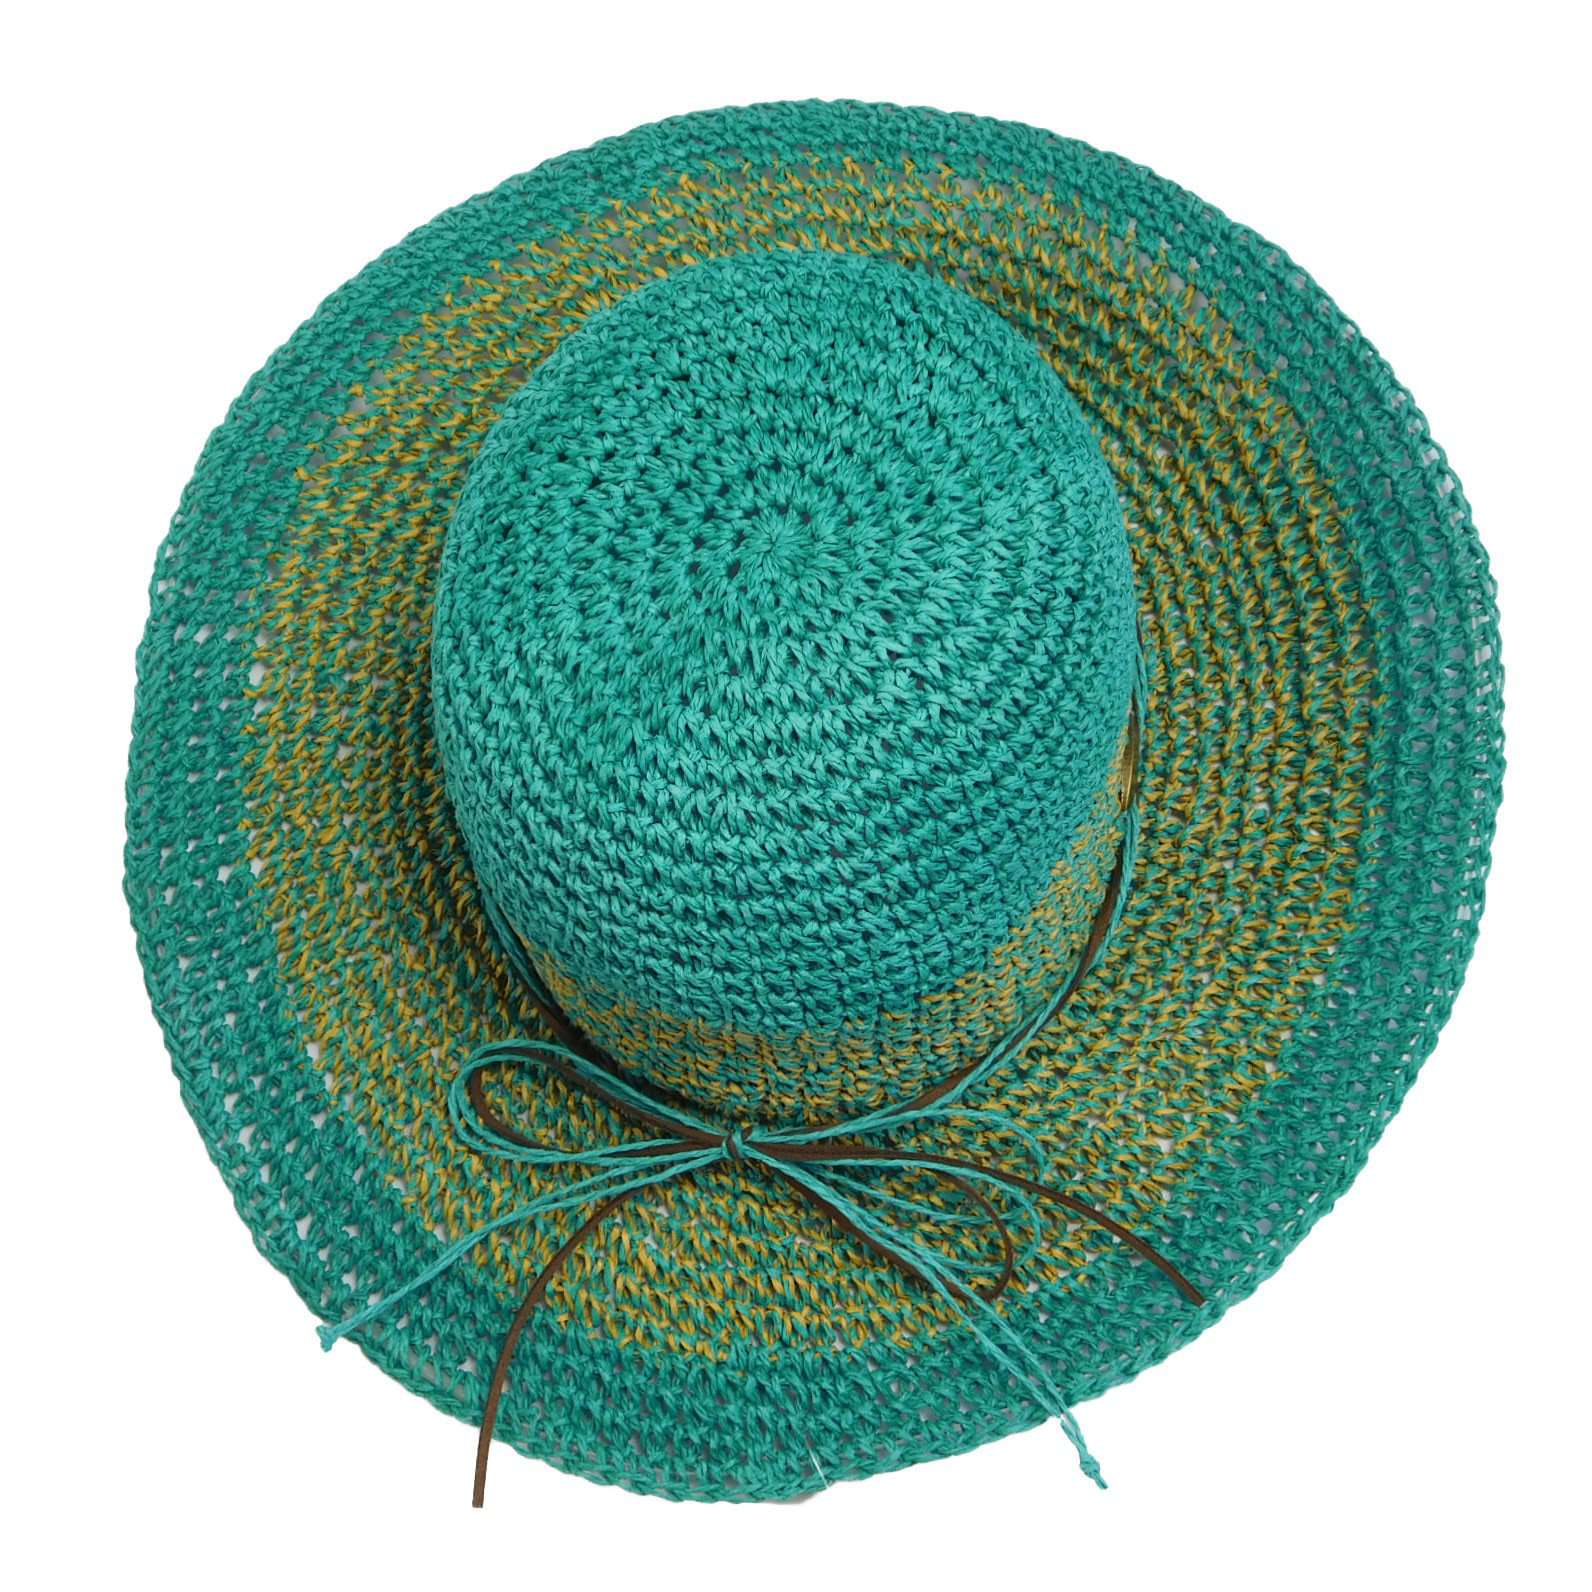 Hand Crocheted Twisted Toyo Floppy Hat - Cappelli Straworld Floppy Hat Cappelli Straworld WSTS499TQ Turquoise Medium (57 cm) 